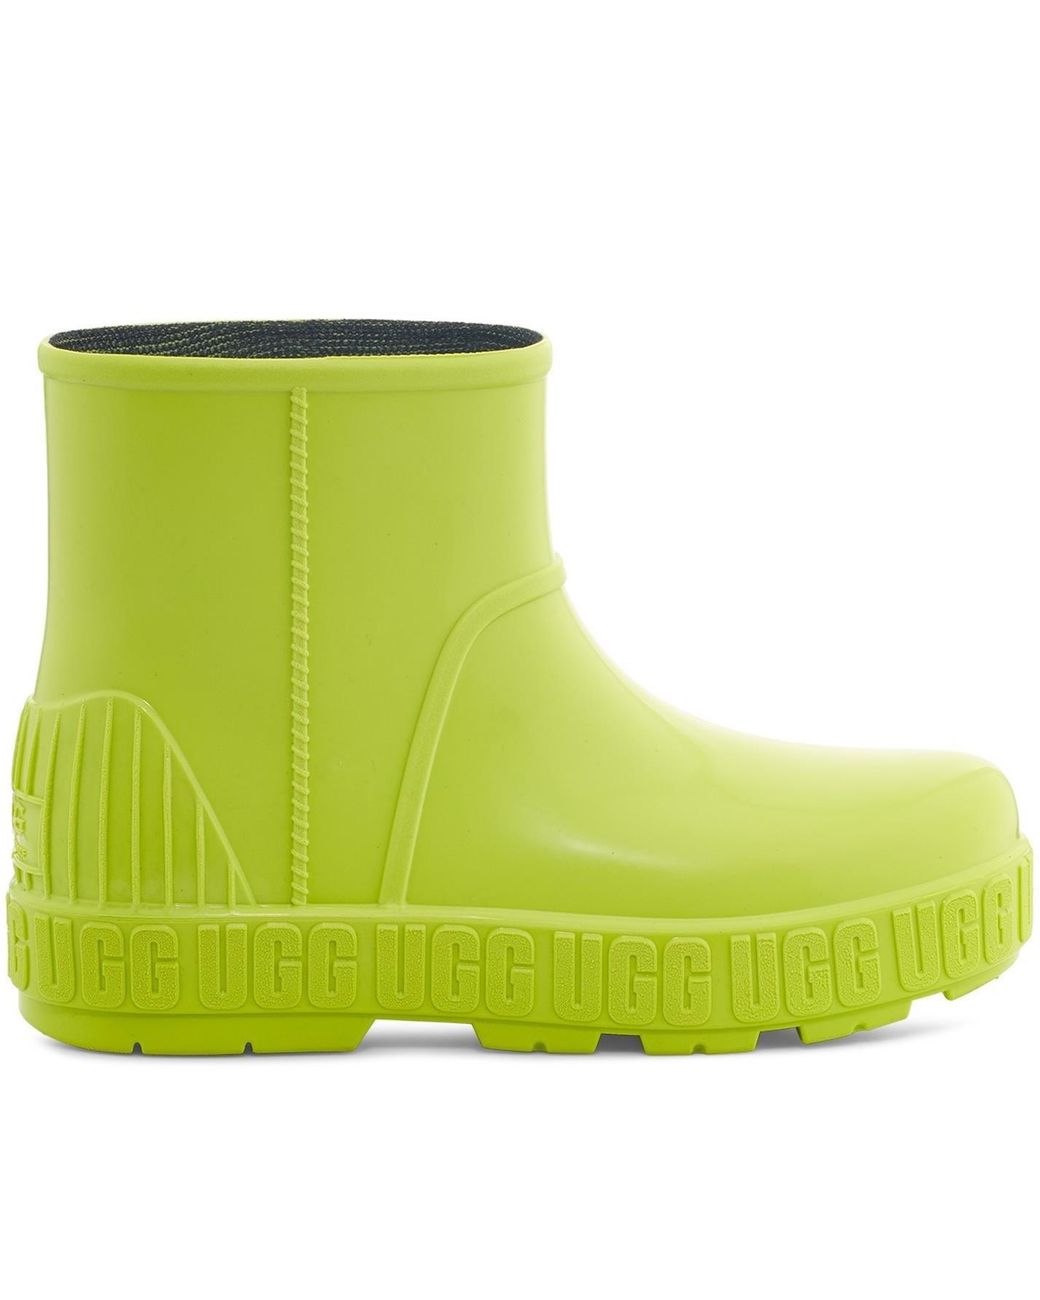 All Sole Shoes Boots Rain Boots Kids’ Drizlita Waterproof Rubber Wellington Boots 